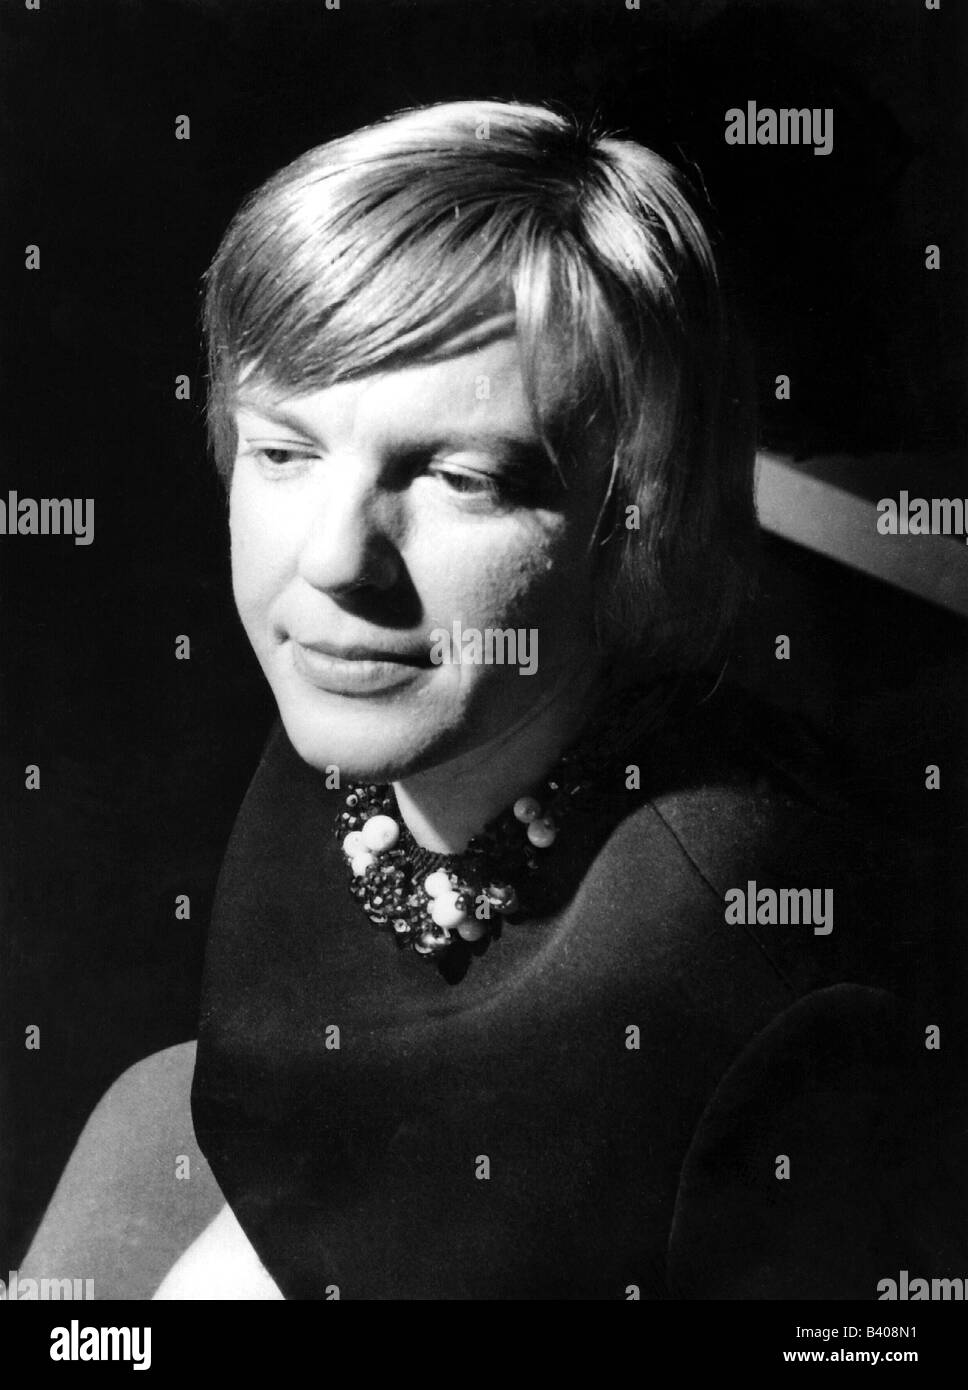 Bachmann, Ingeborg, 25.6.1926 - 17.10.1973, Austrian author / writer, portrait, 1960s, Stock Photo